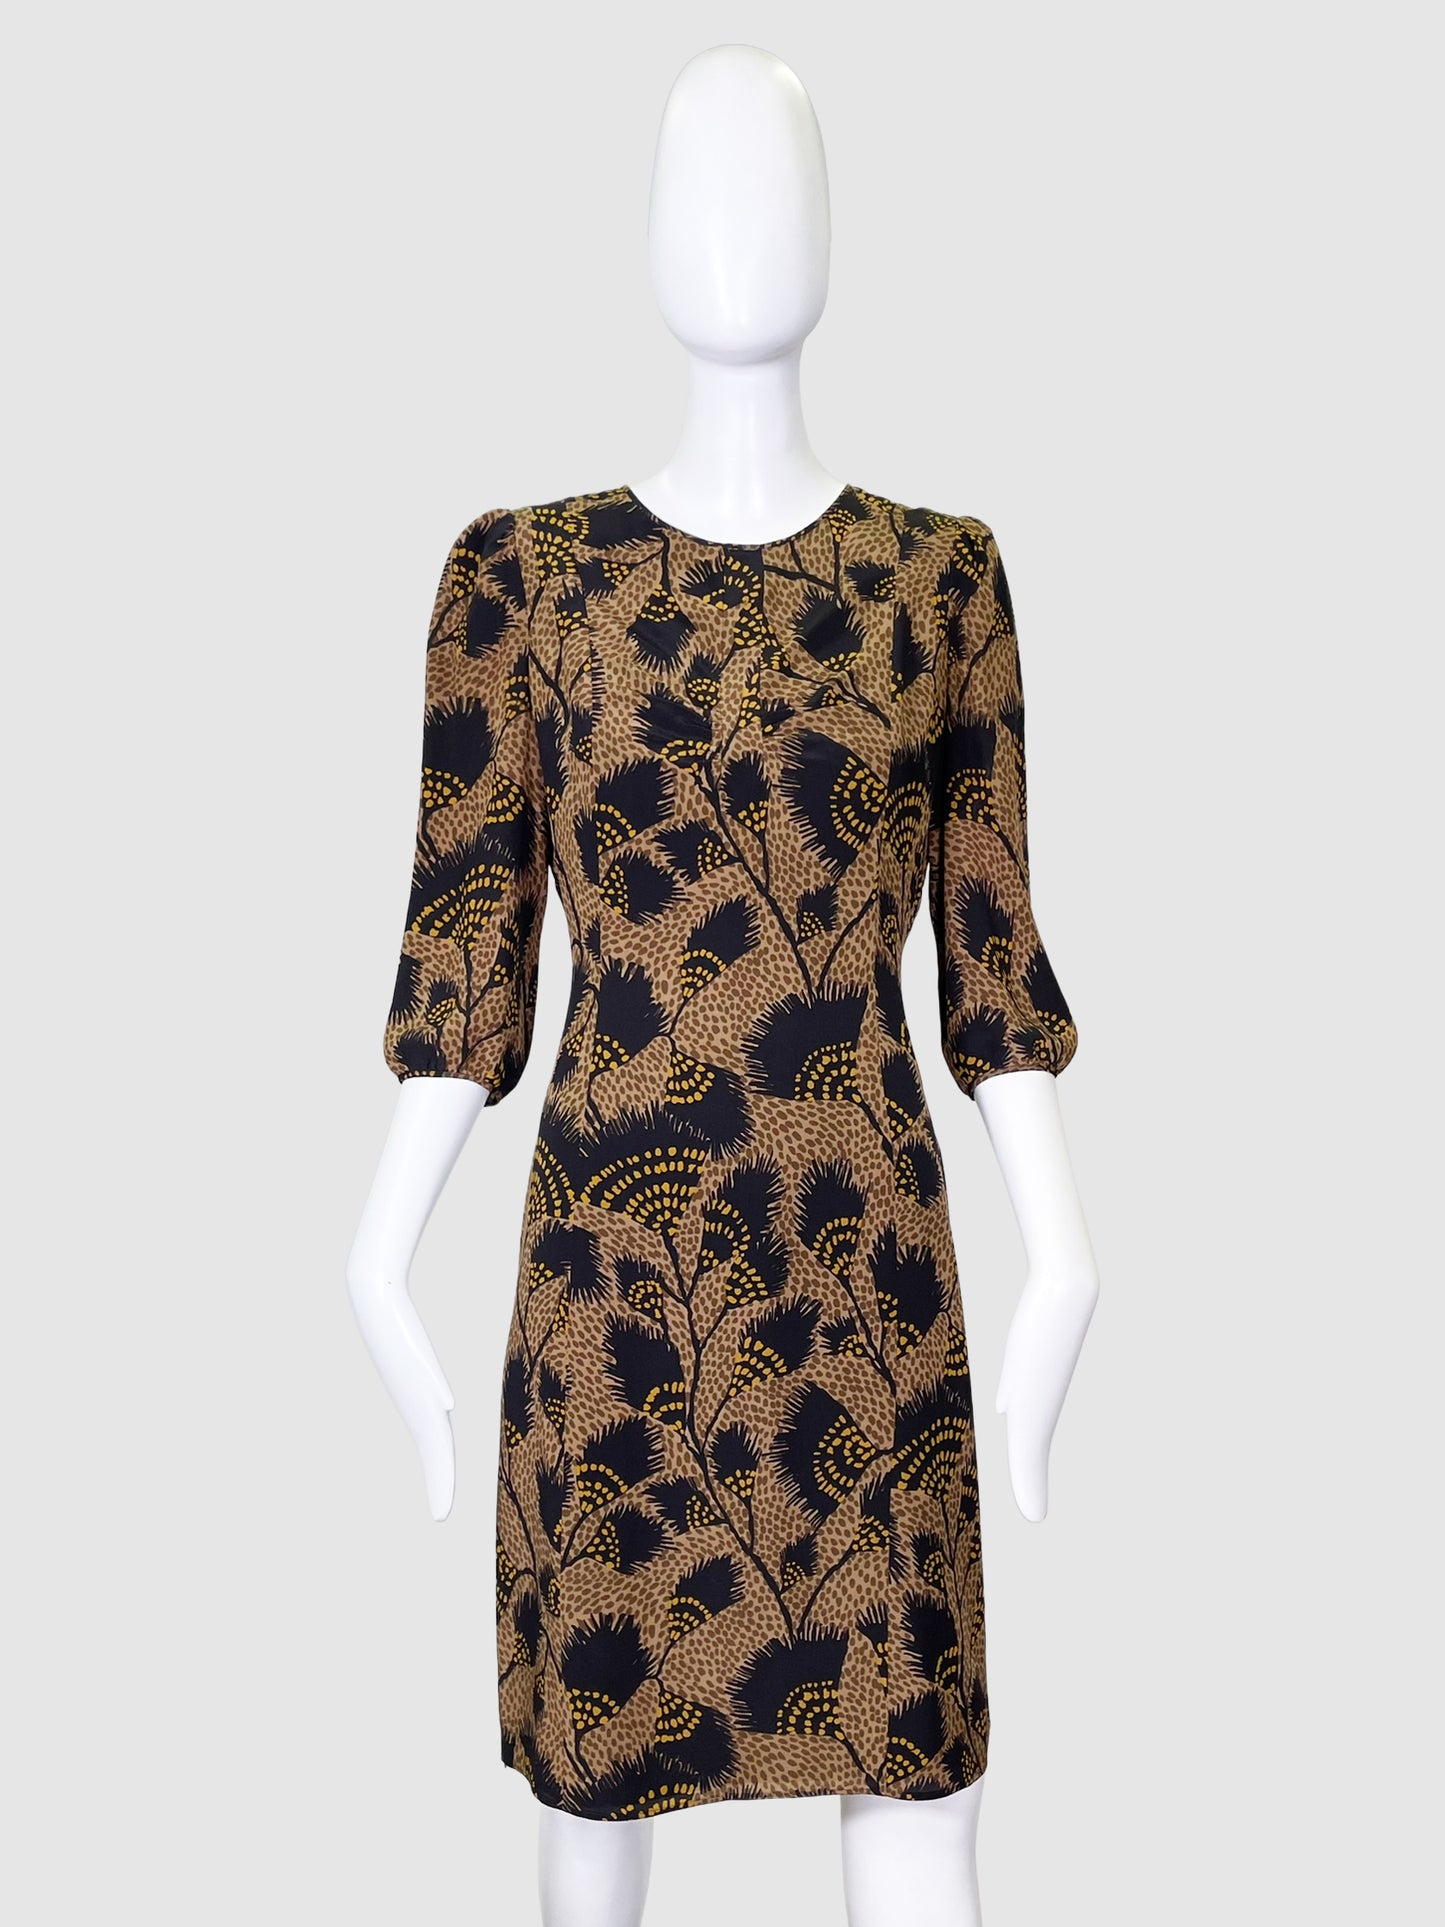 Burberry Printed Silk Dress - Size 6